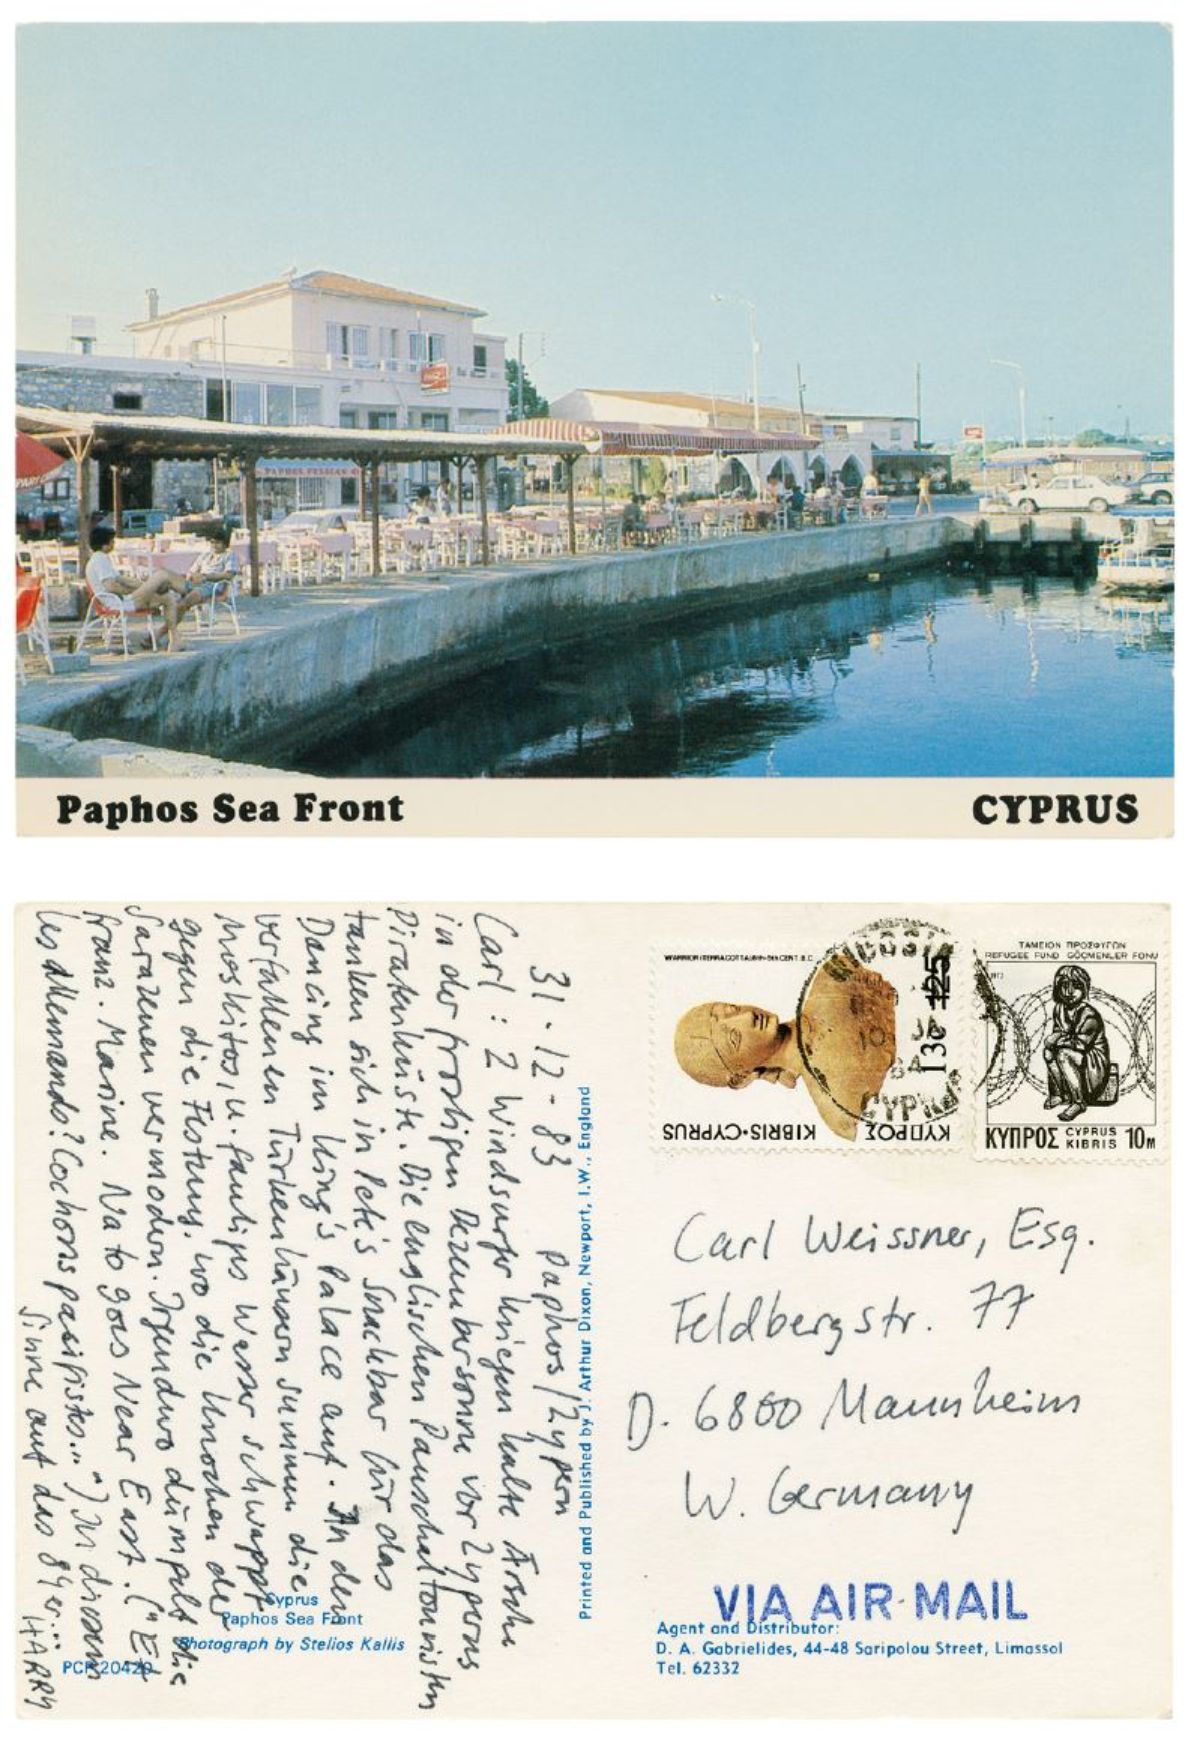 Postkarte vom 31. Dezember 1983